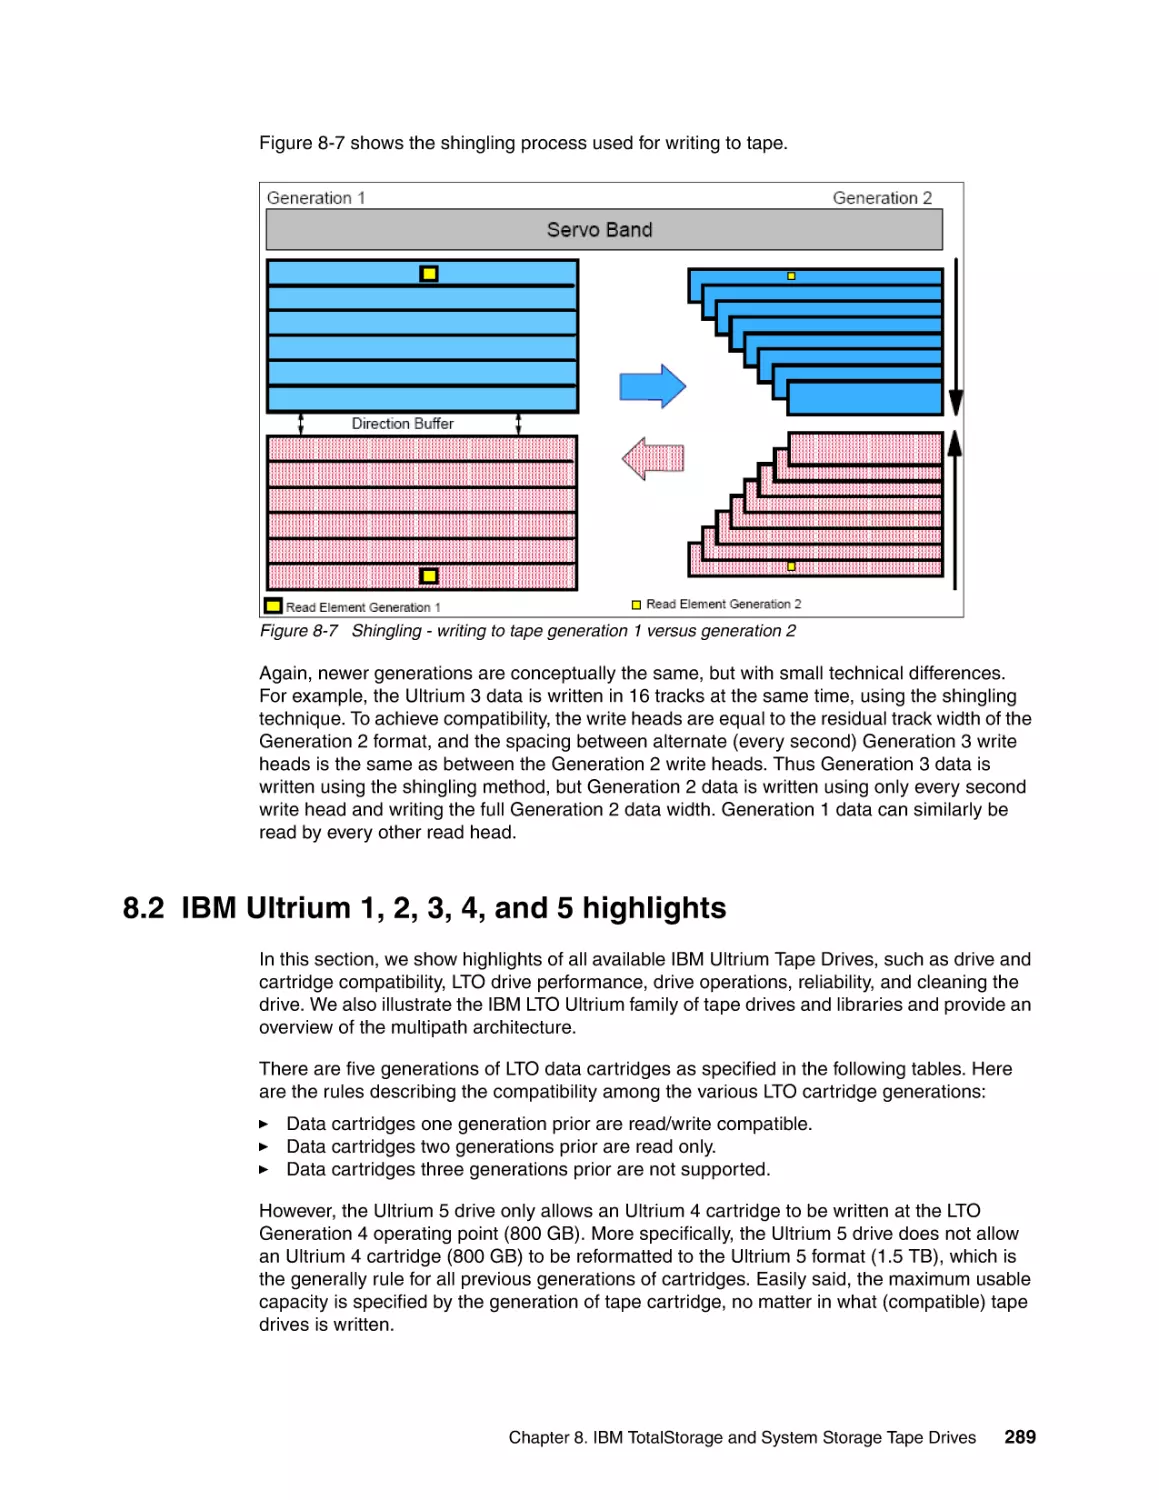 8.2 IBM Ultrium 1, 2, 3, 4, and 5 highlights